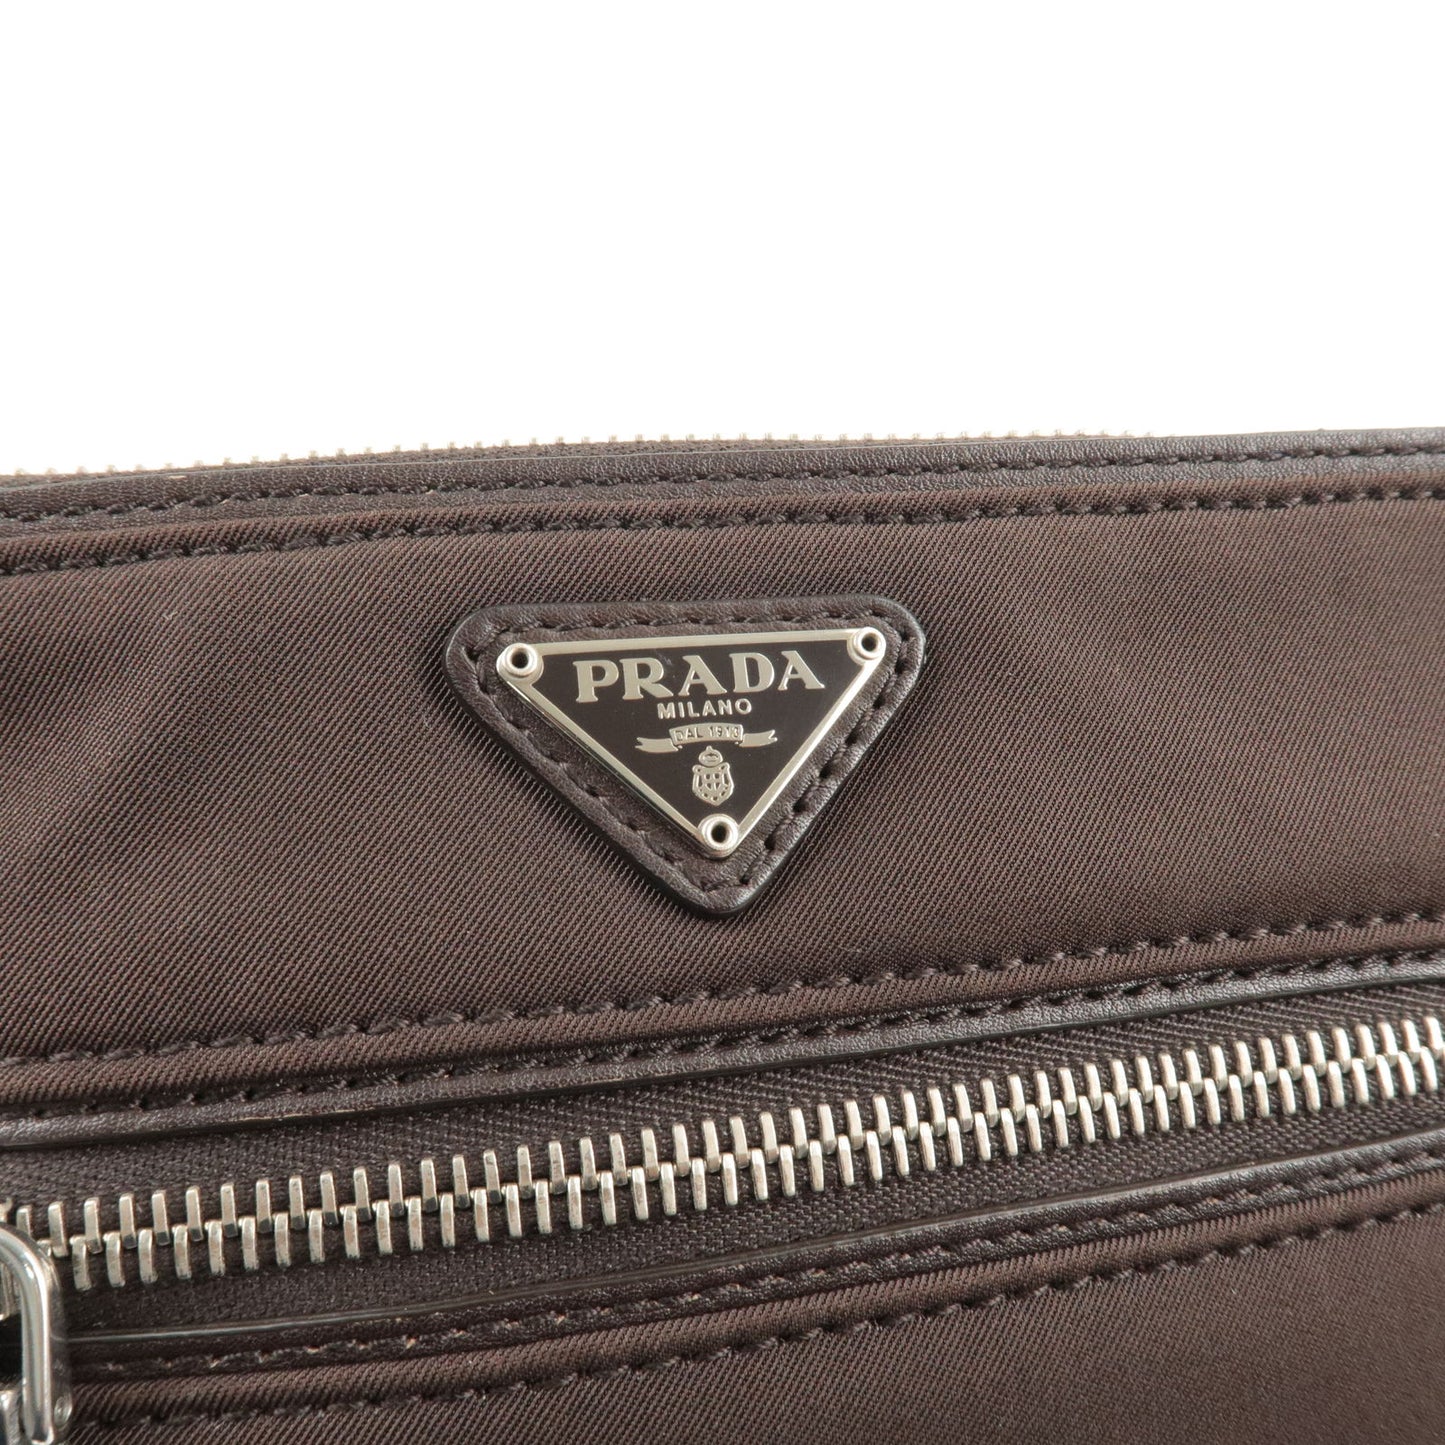 PRADA Nylon Leather Shoulder Bag Pouch Brown